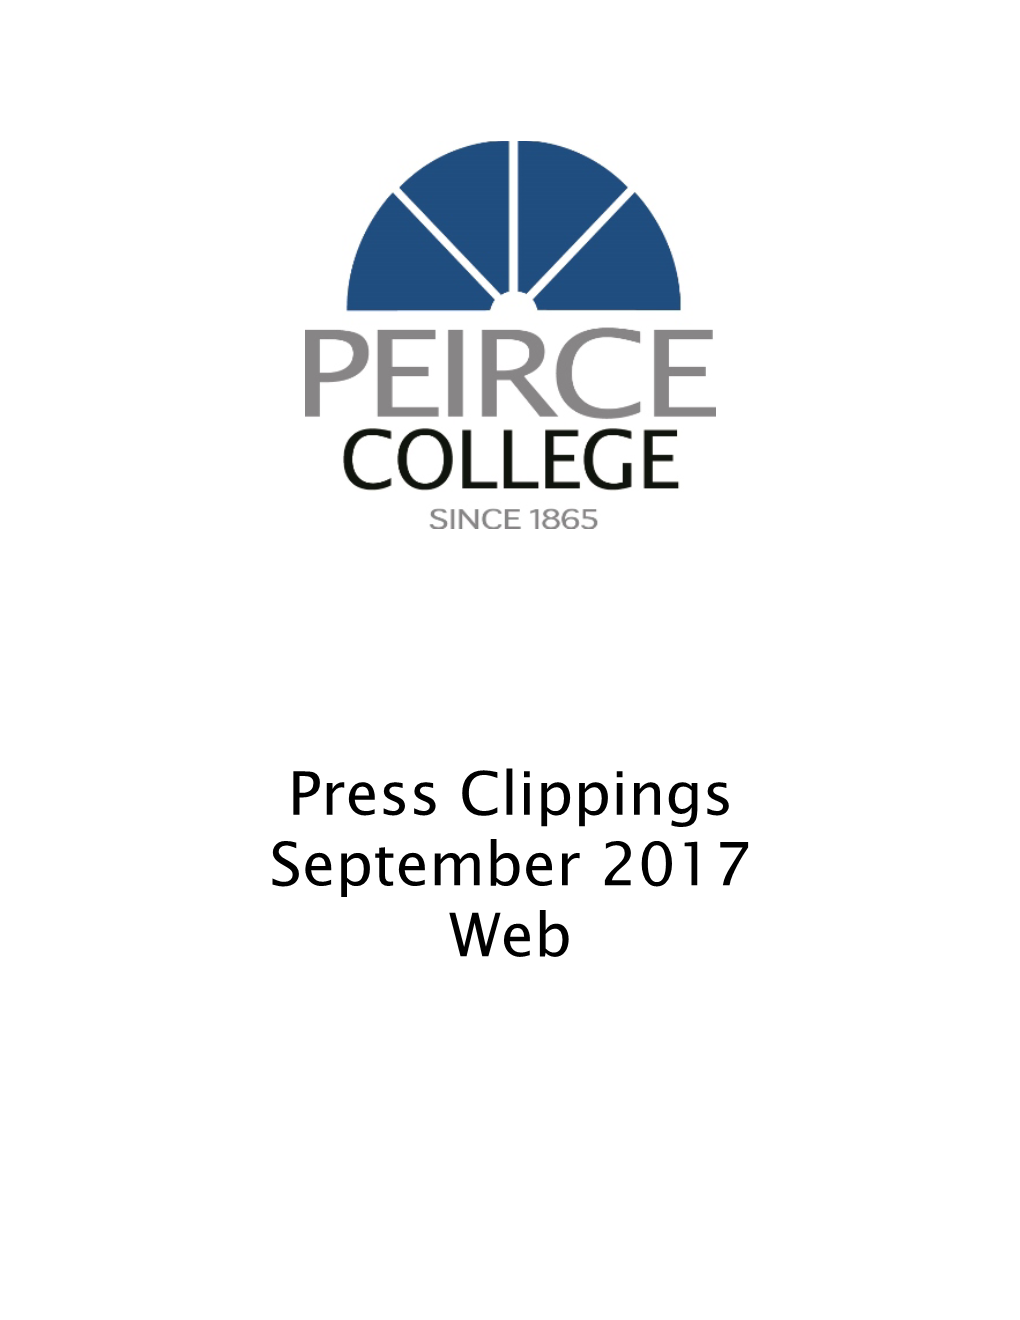 Press Clippings September 2017 Web